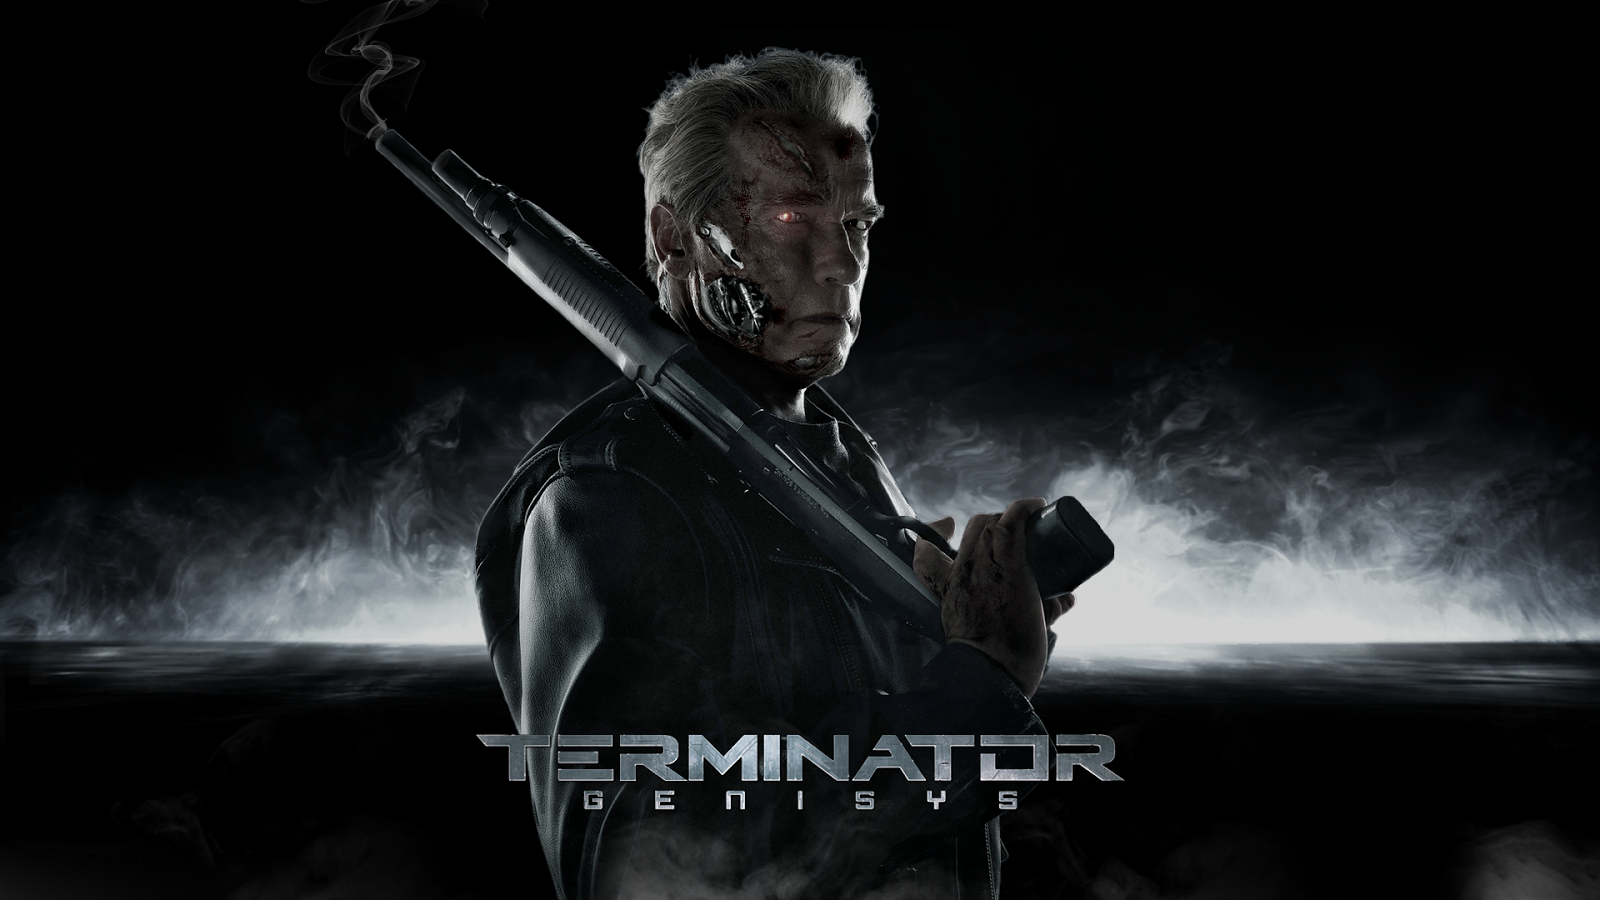 Arnold T800 Terminator Genisys Wallpaper